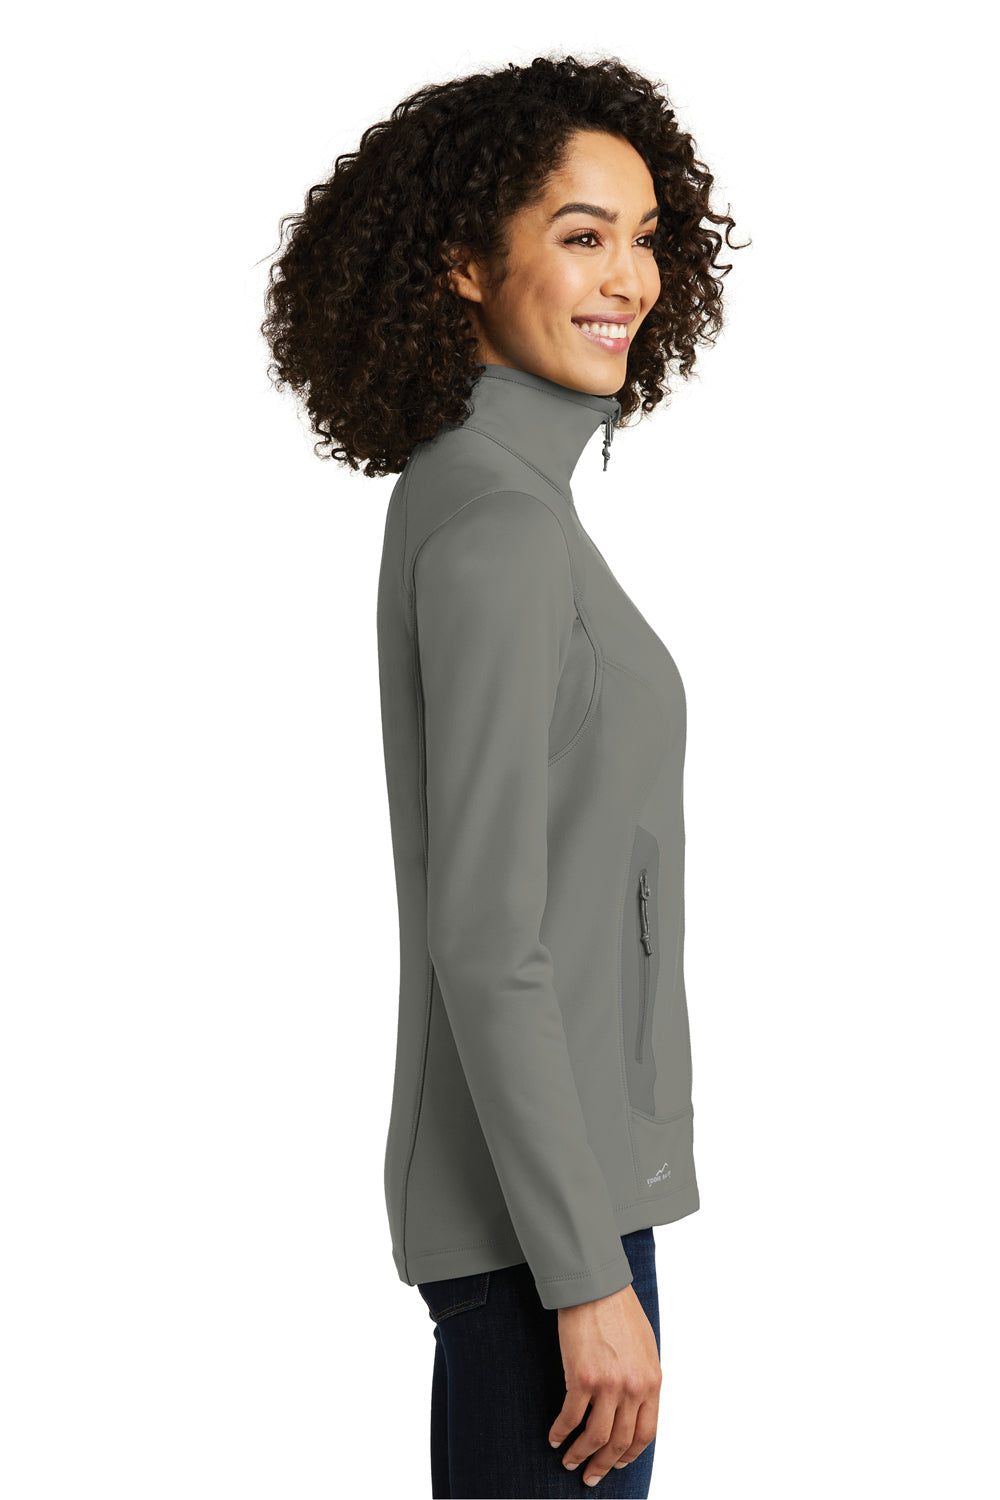 Eddie Bauer EB241 Womens Highpoint Pill Resistant Fleece Full Zip Jacket Metal Grey Model Side